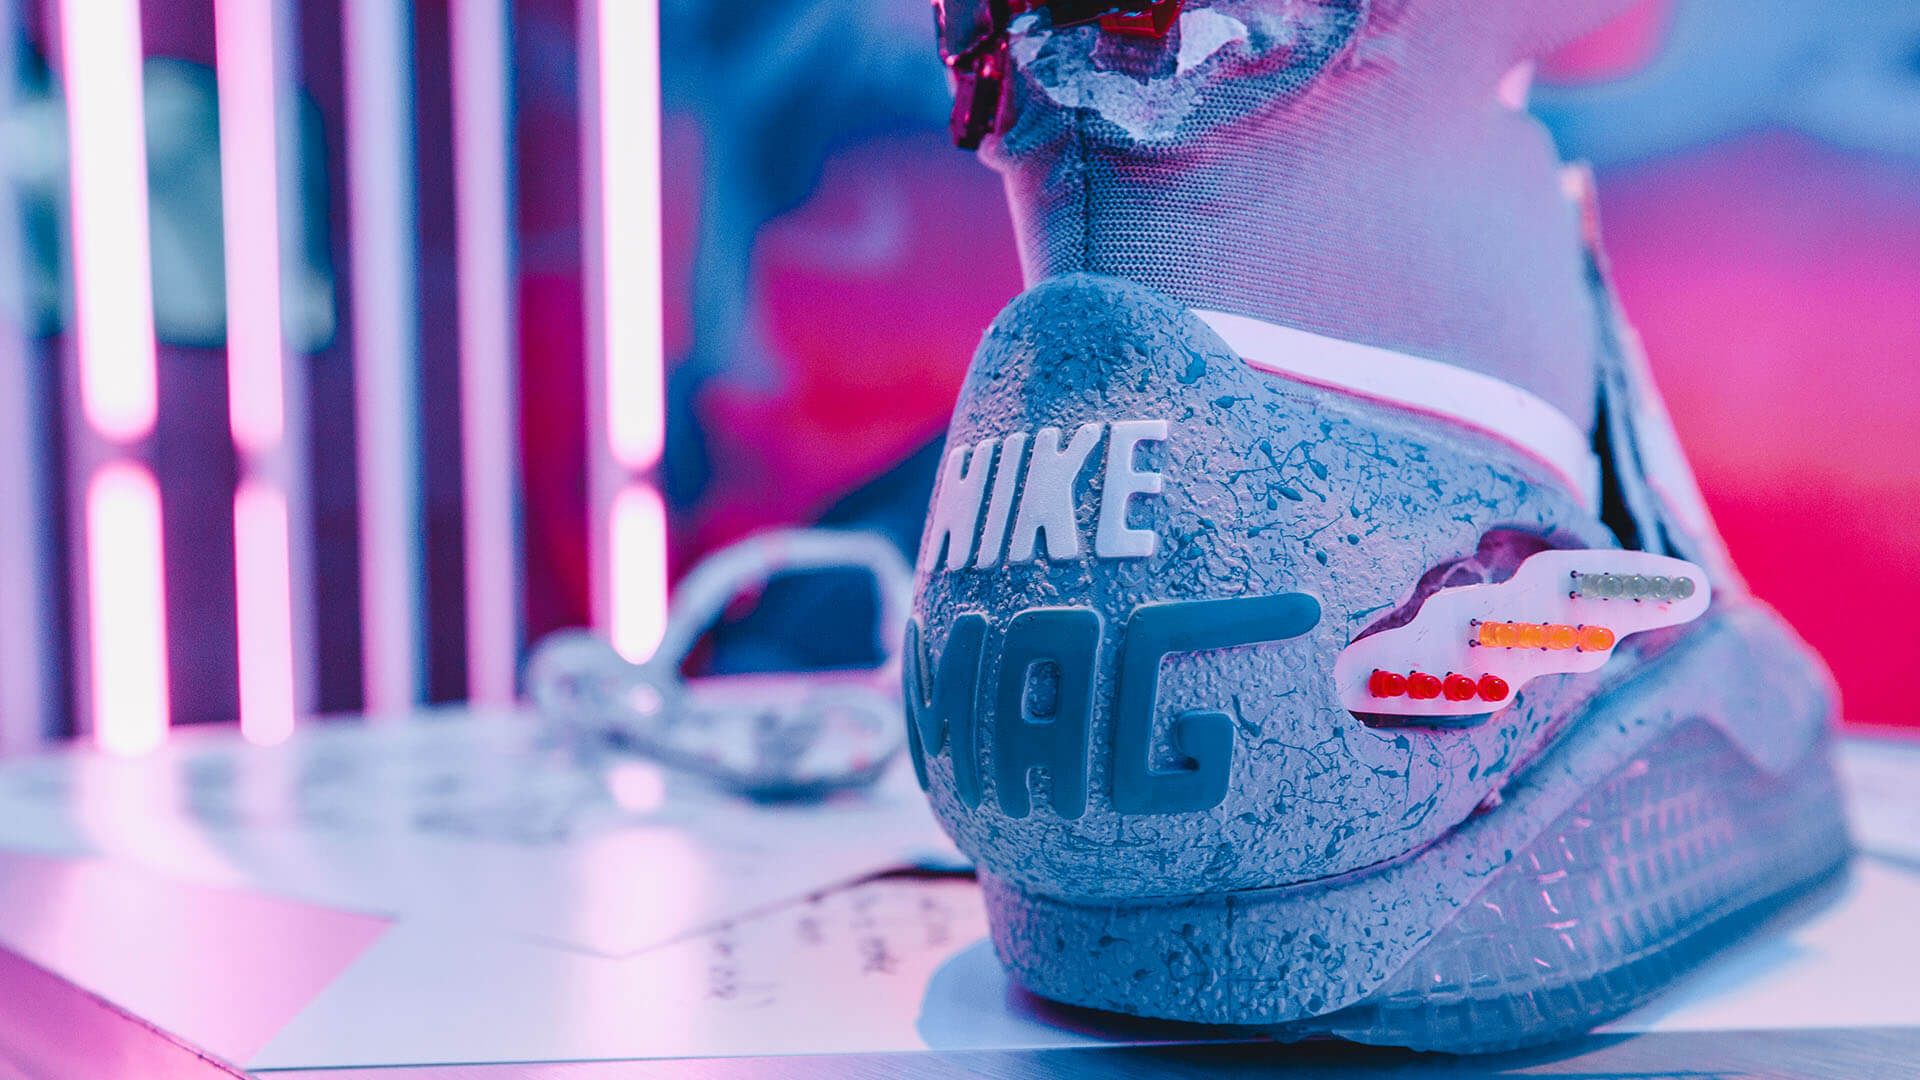 Nike Mag logo on heel of shoe